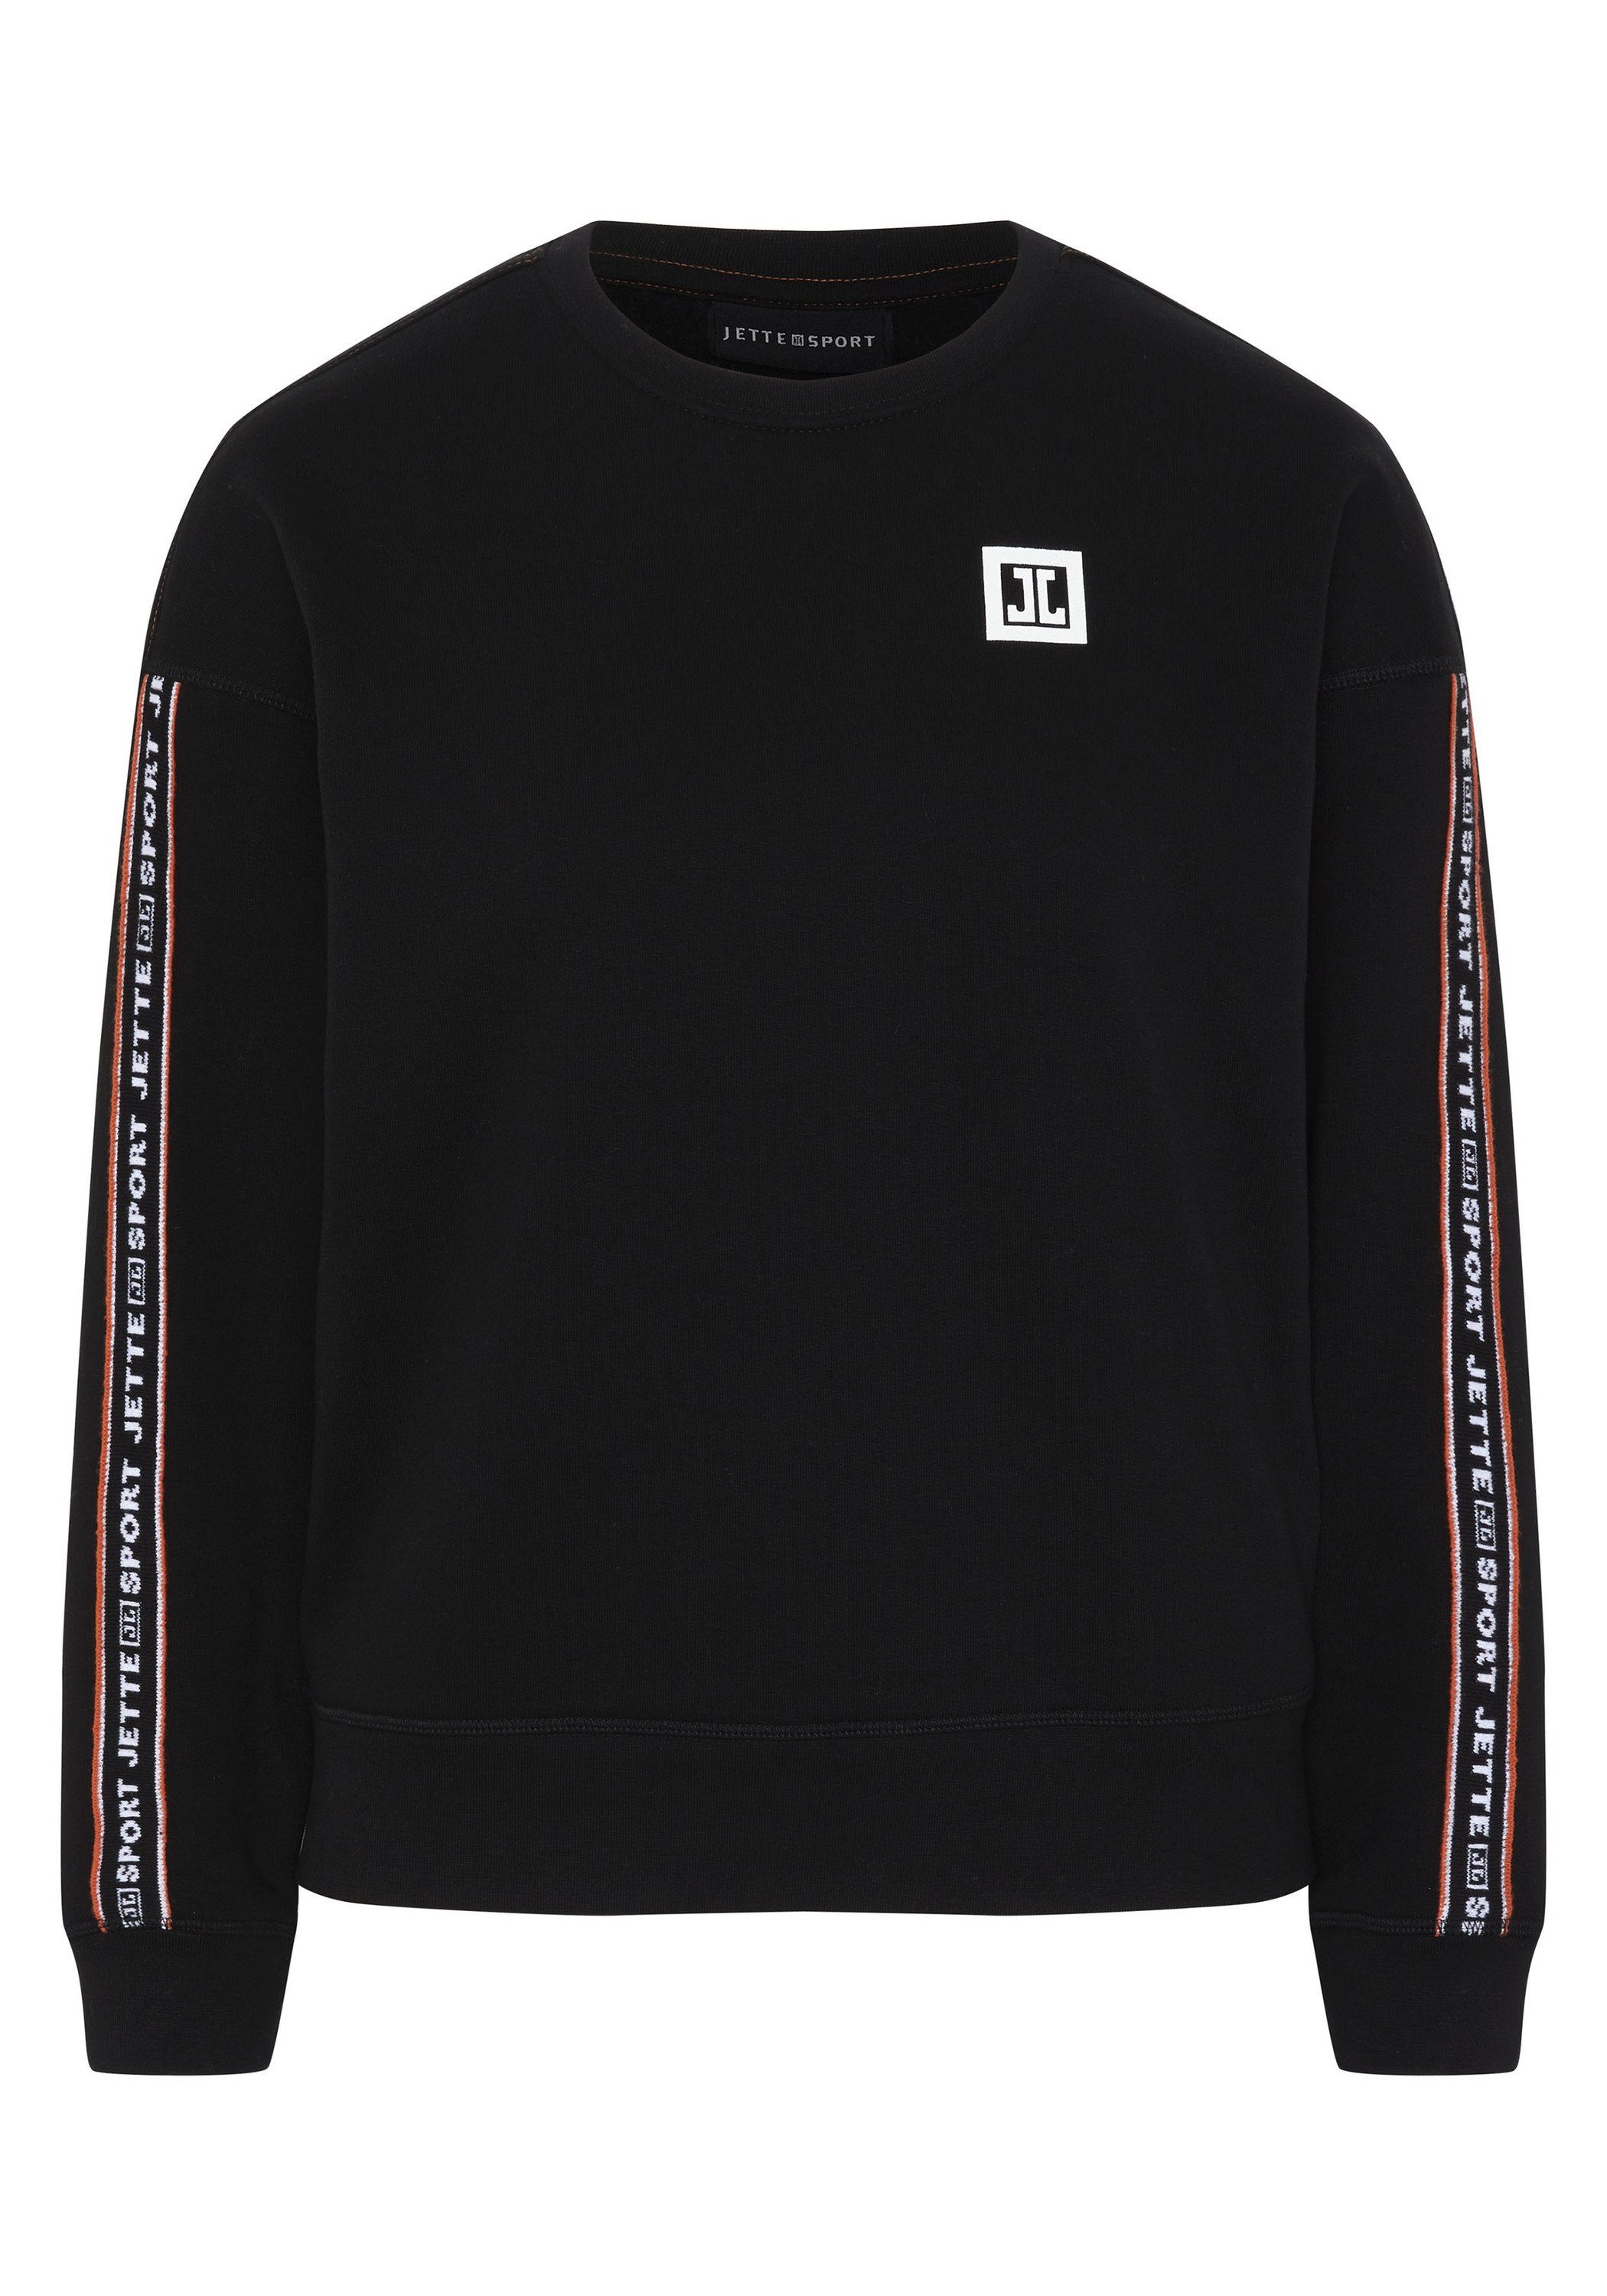 JETTE SPORT Sweatshirt im Label-Design 19-3911 Deep Black